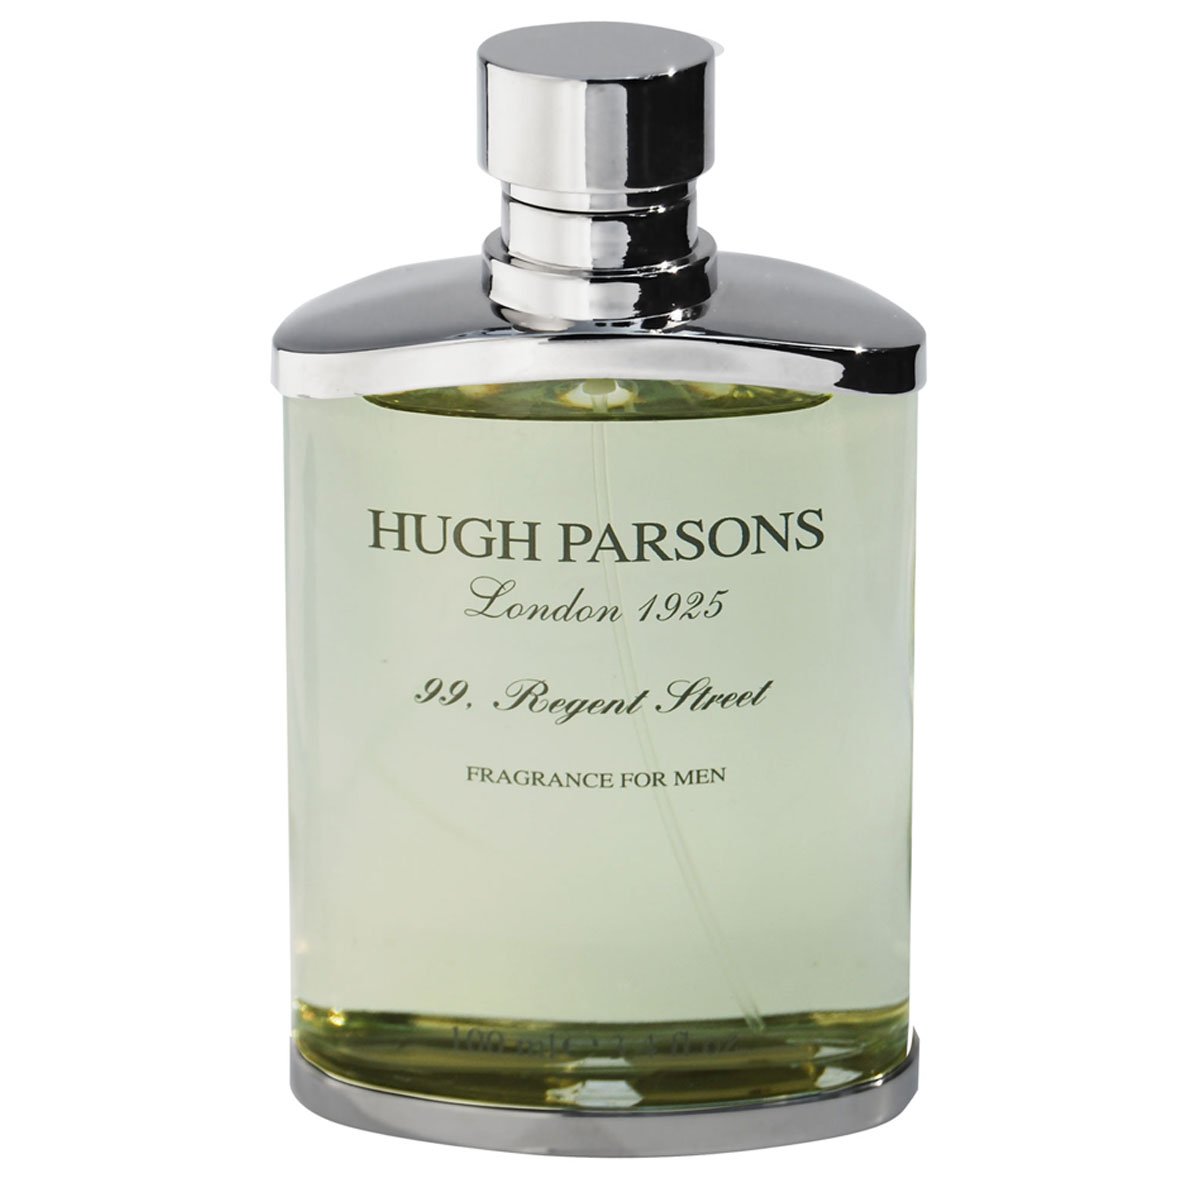 Hugh Parsons 99 Regent Street Eau de Parfum Natural Spray, 100 ml